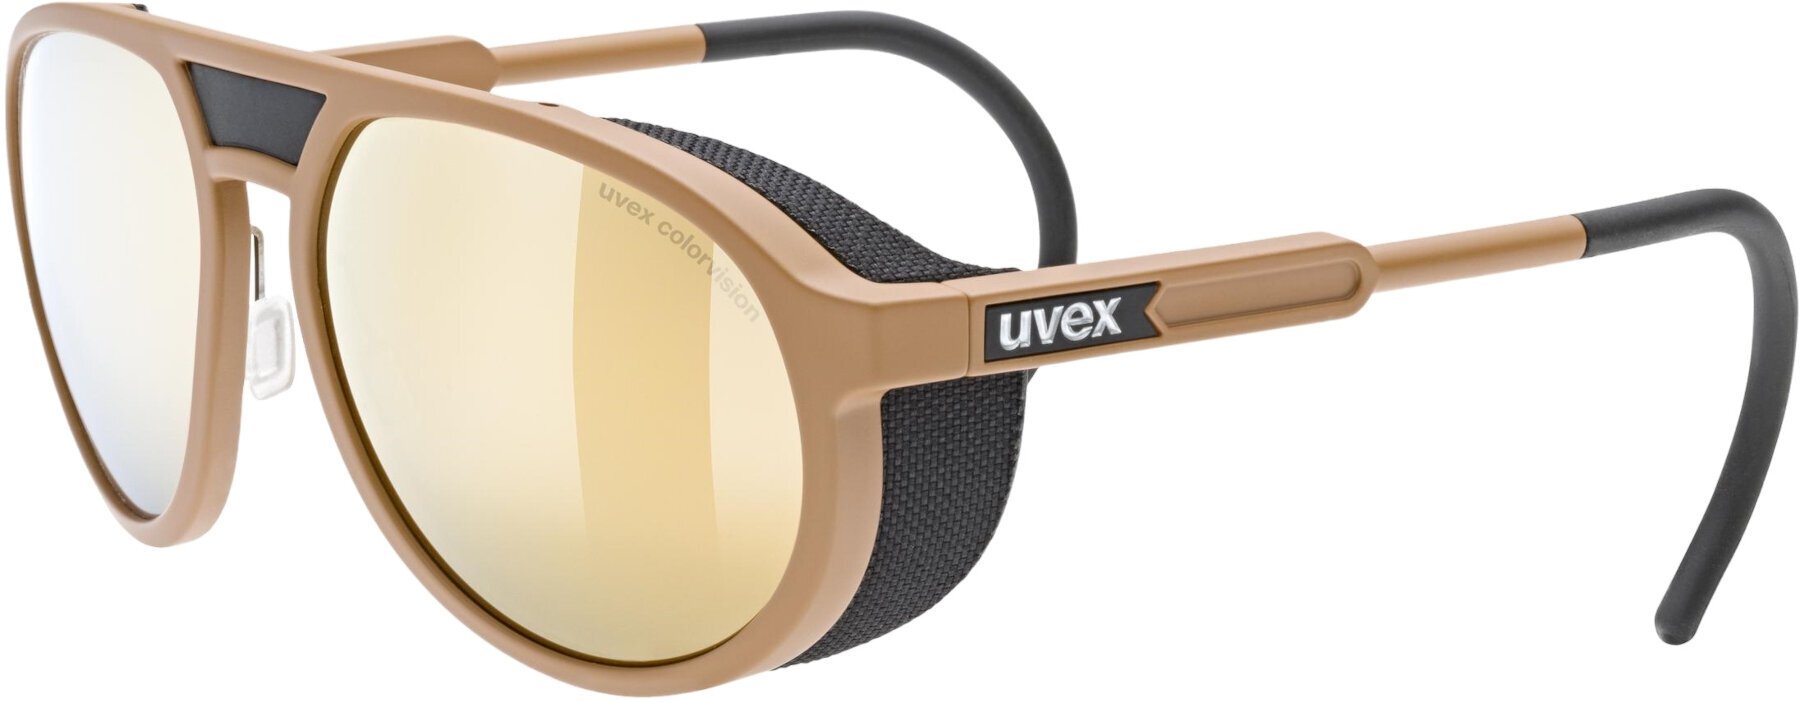 Solglasögon för friluftsliv UVEX MTN Classic CV Desert Mat/Colorvision Mirror Champagne Solglasögon för friluftsliv